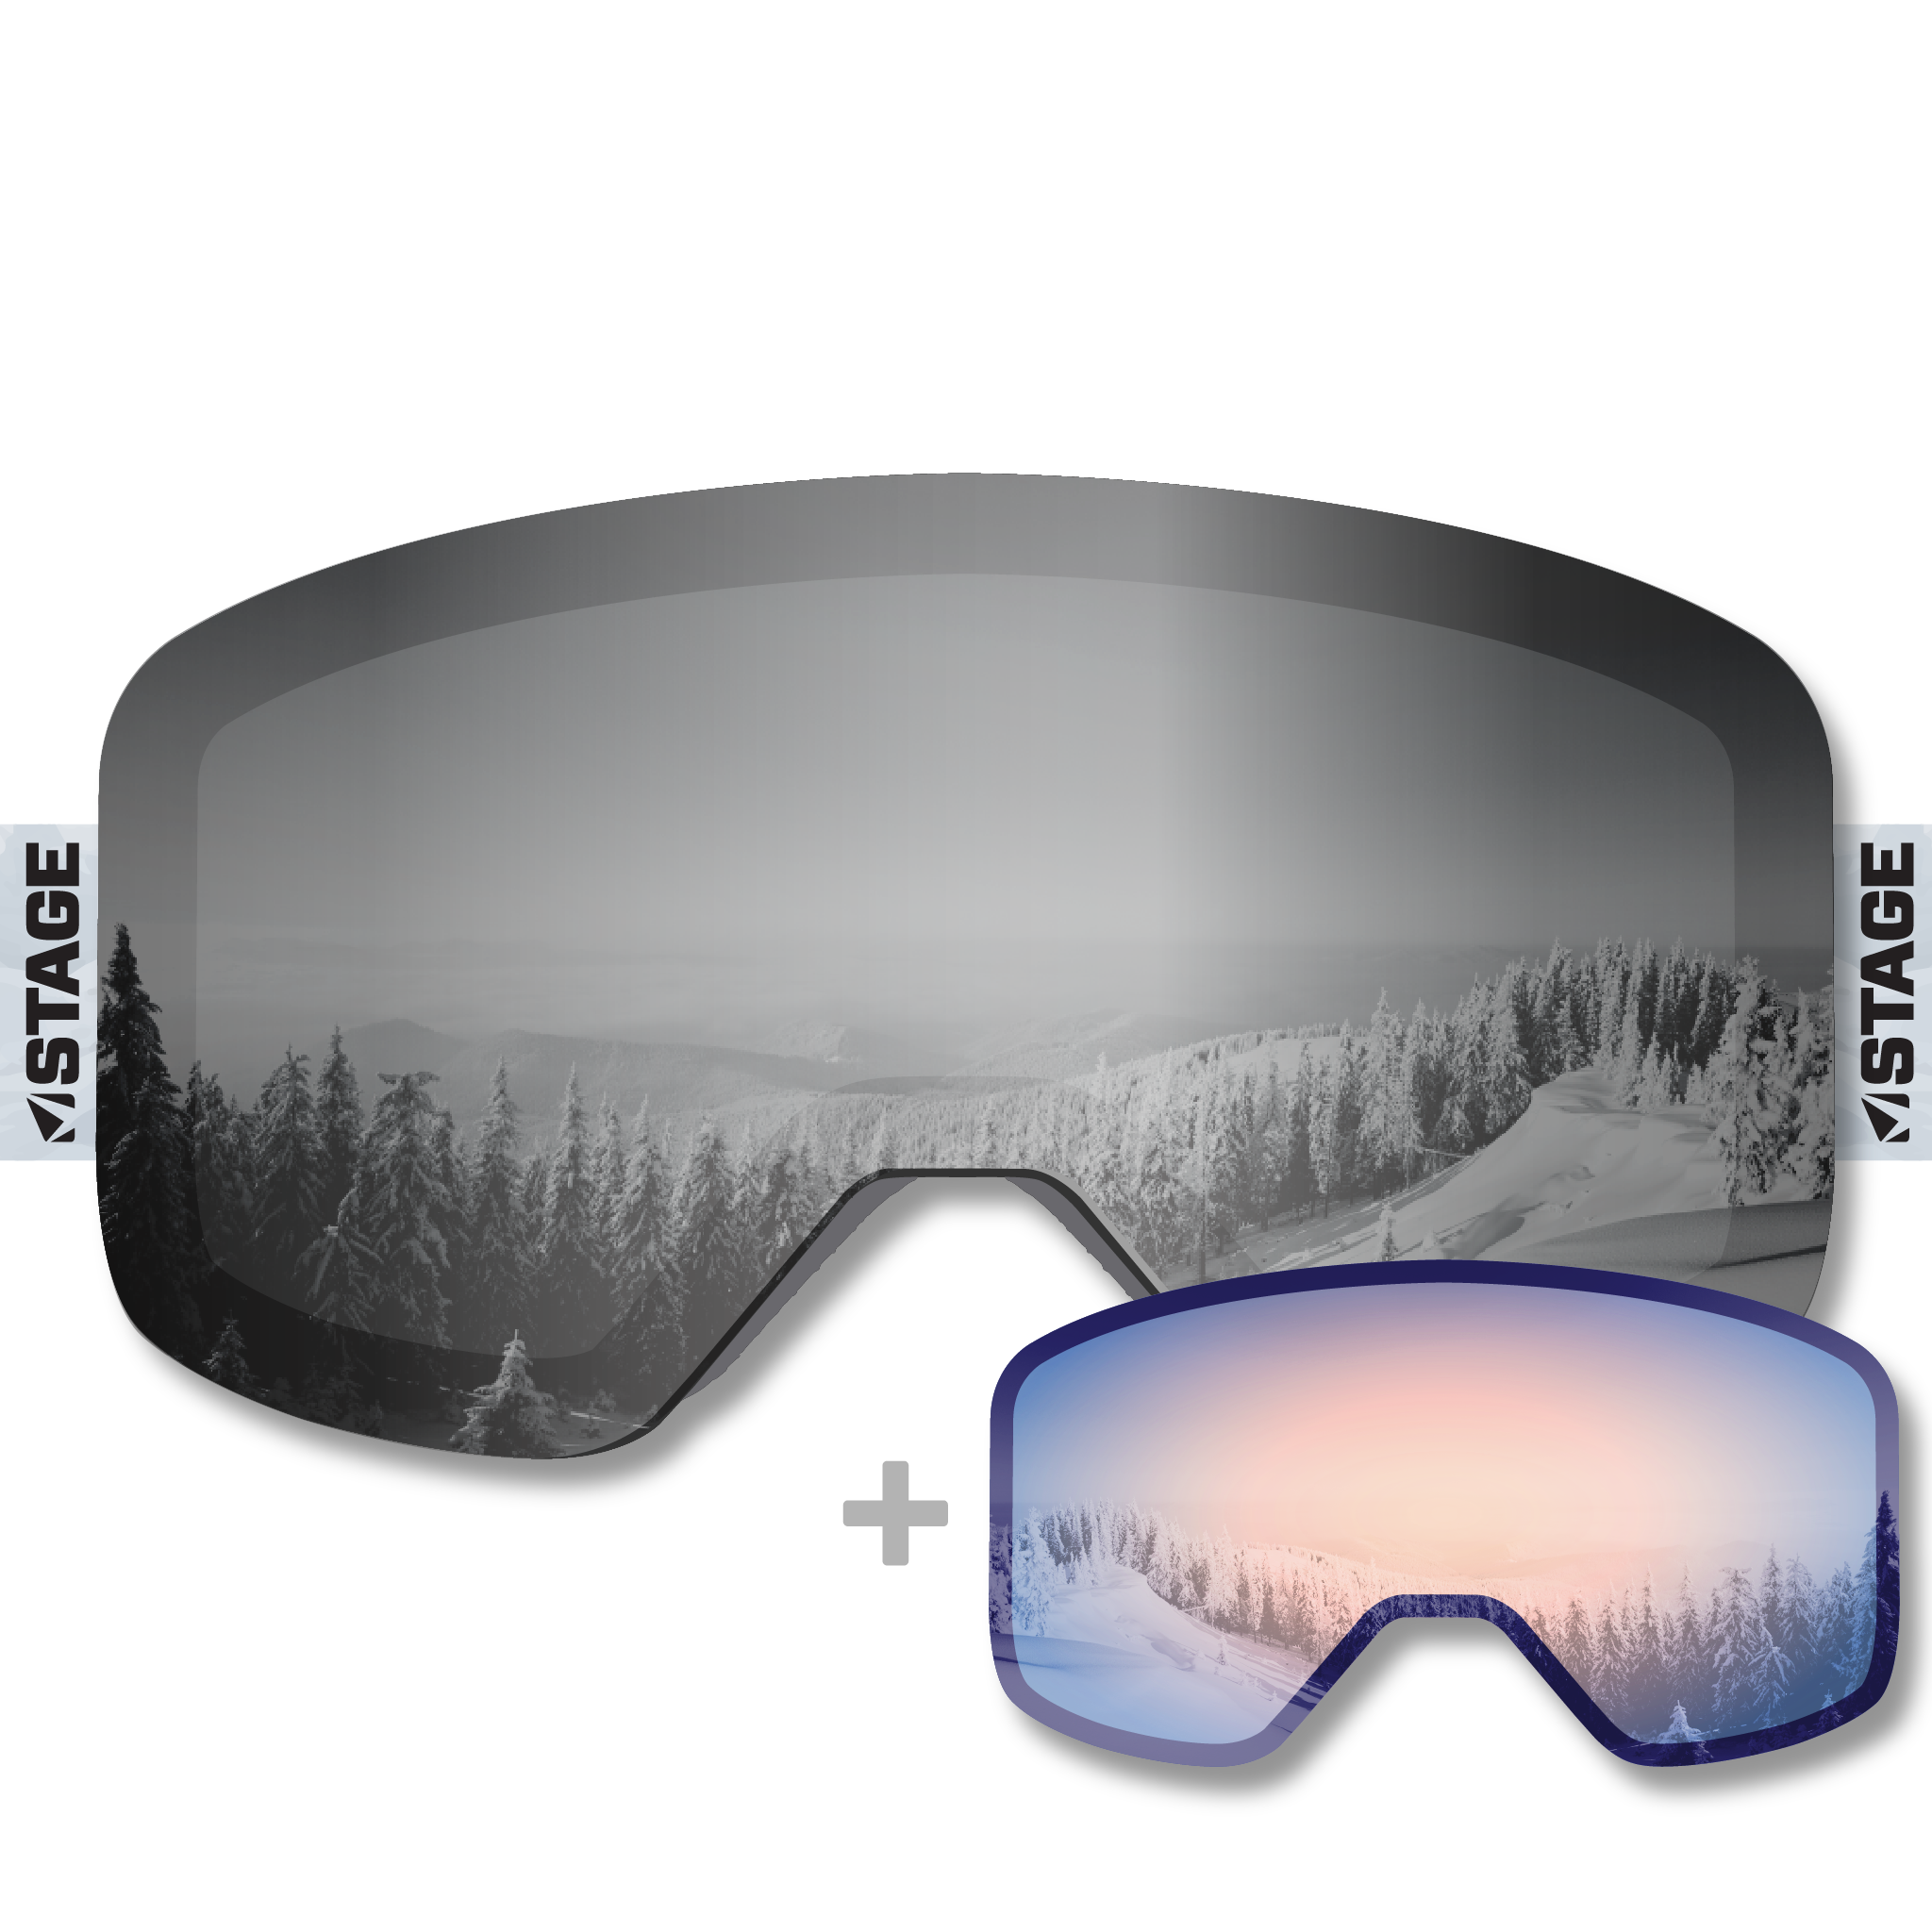 Deep Creek Lake Lions Propnetic - Magnetic Ski Goggle + Bonus Lens